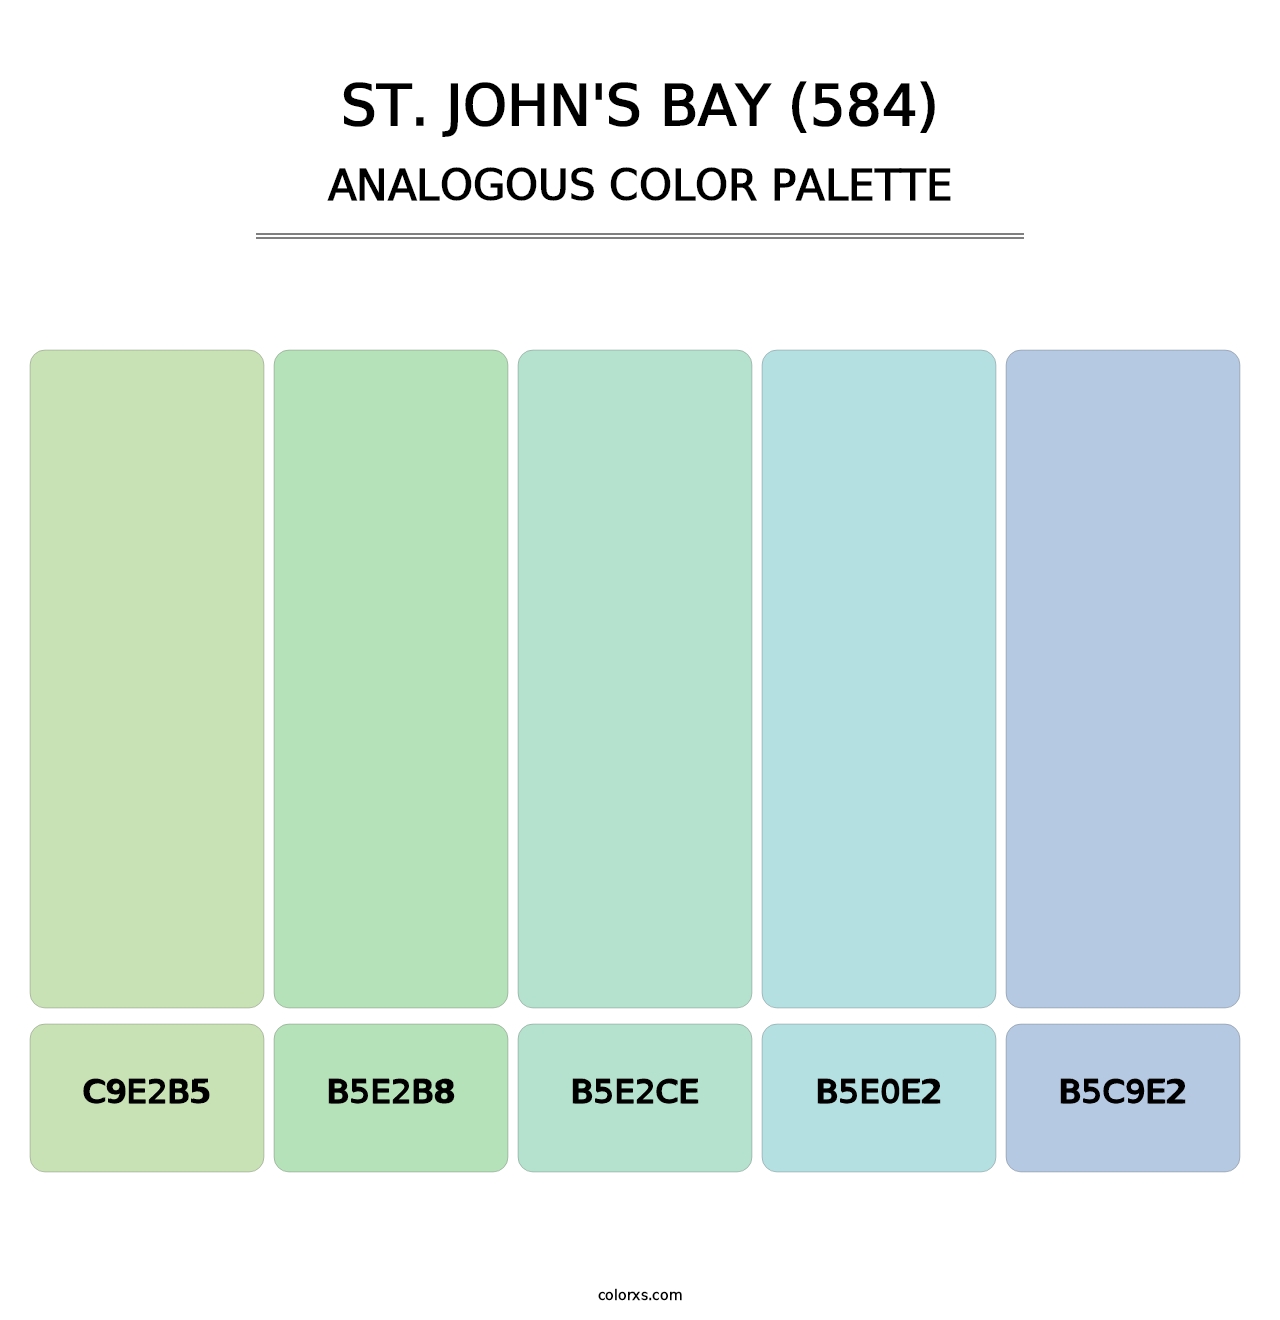 St. John's Bay (584) - Analogous Color Palette